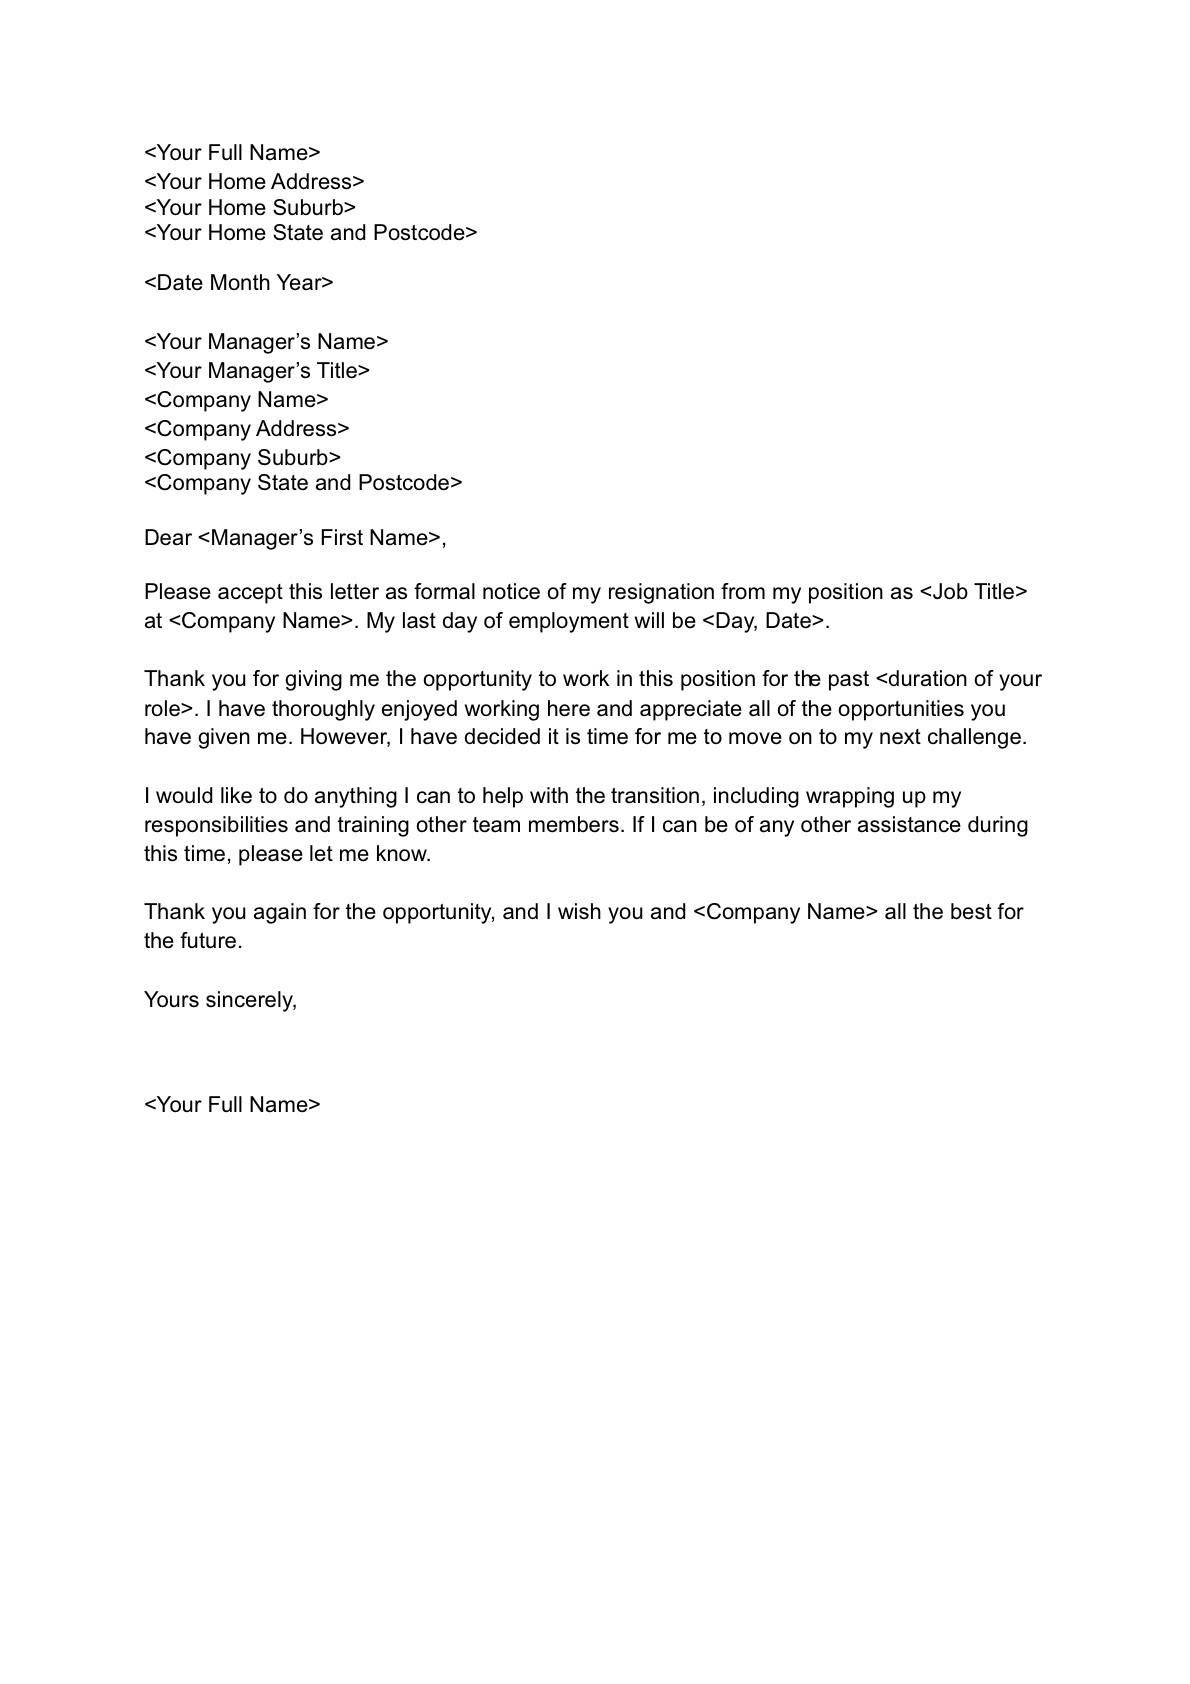 Download SEEK's free standard resignation letter template